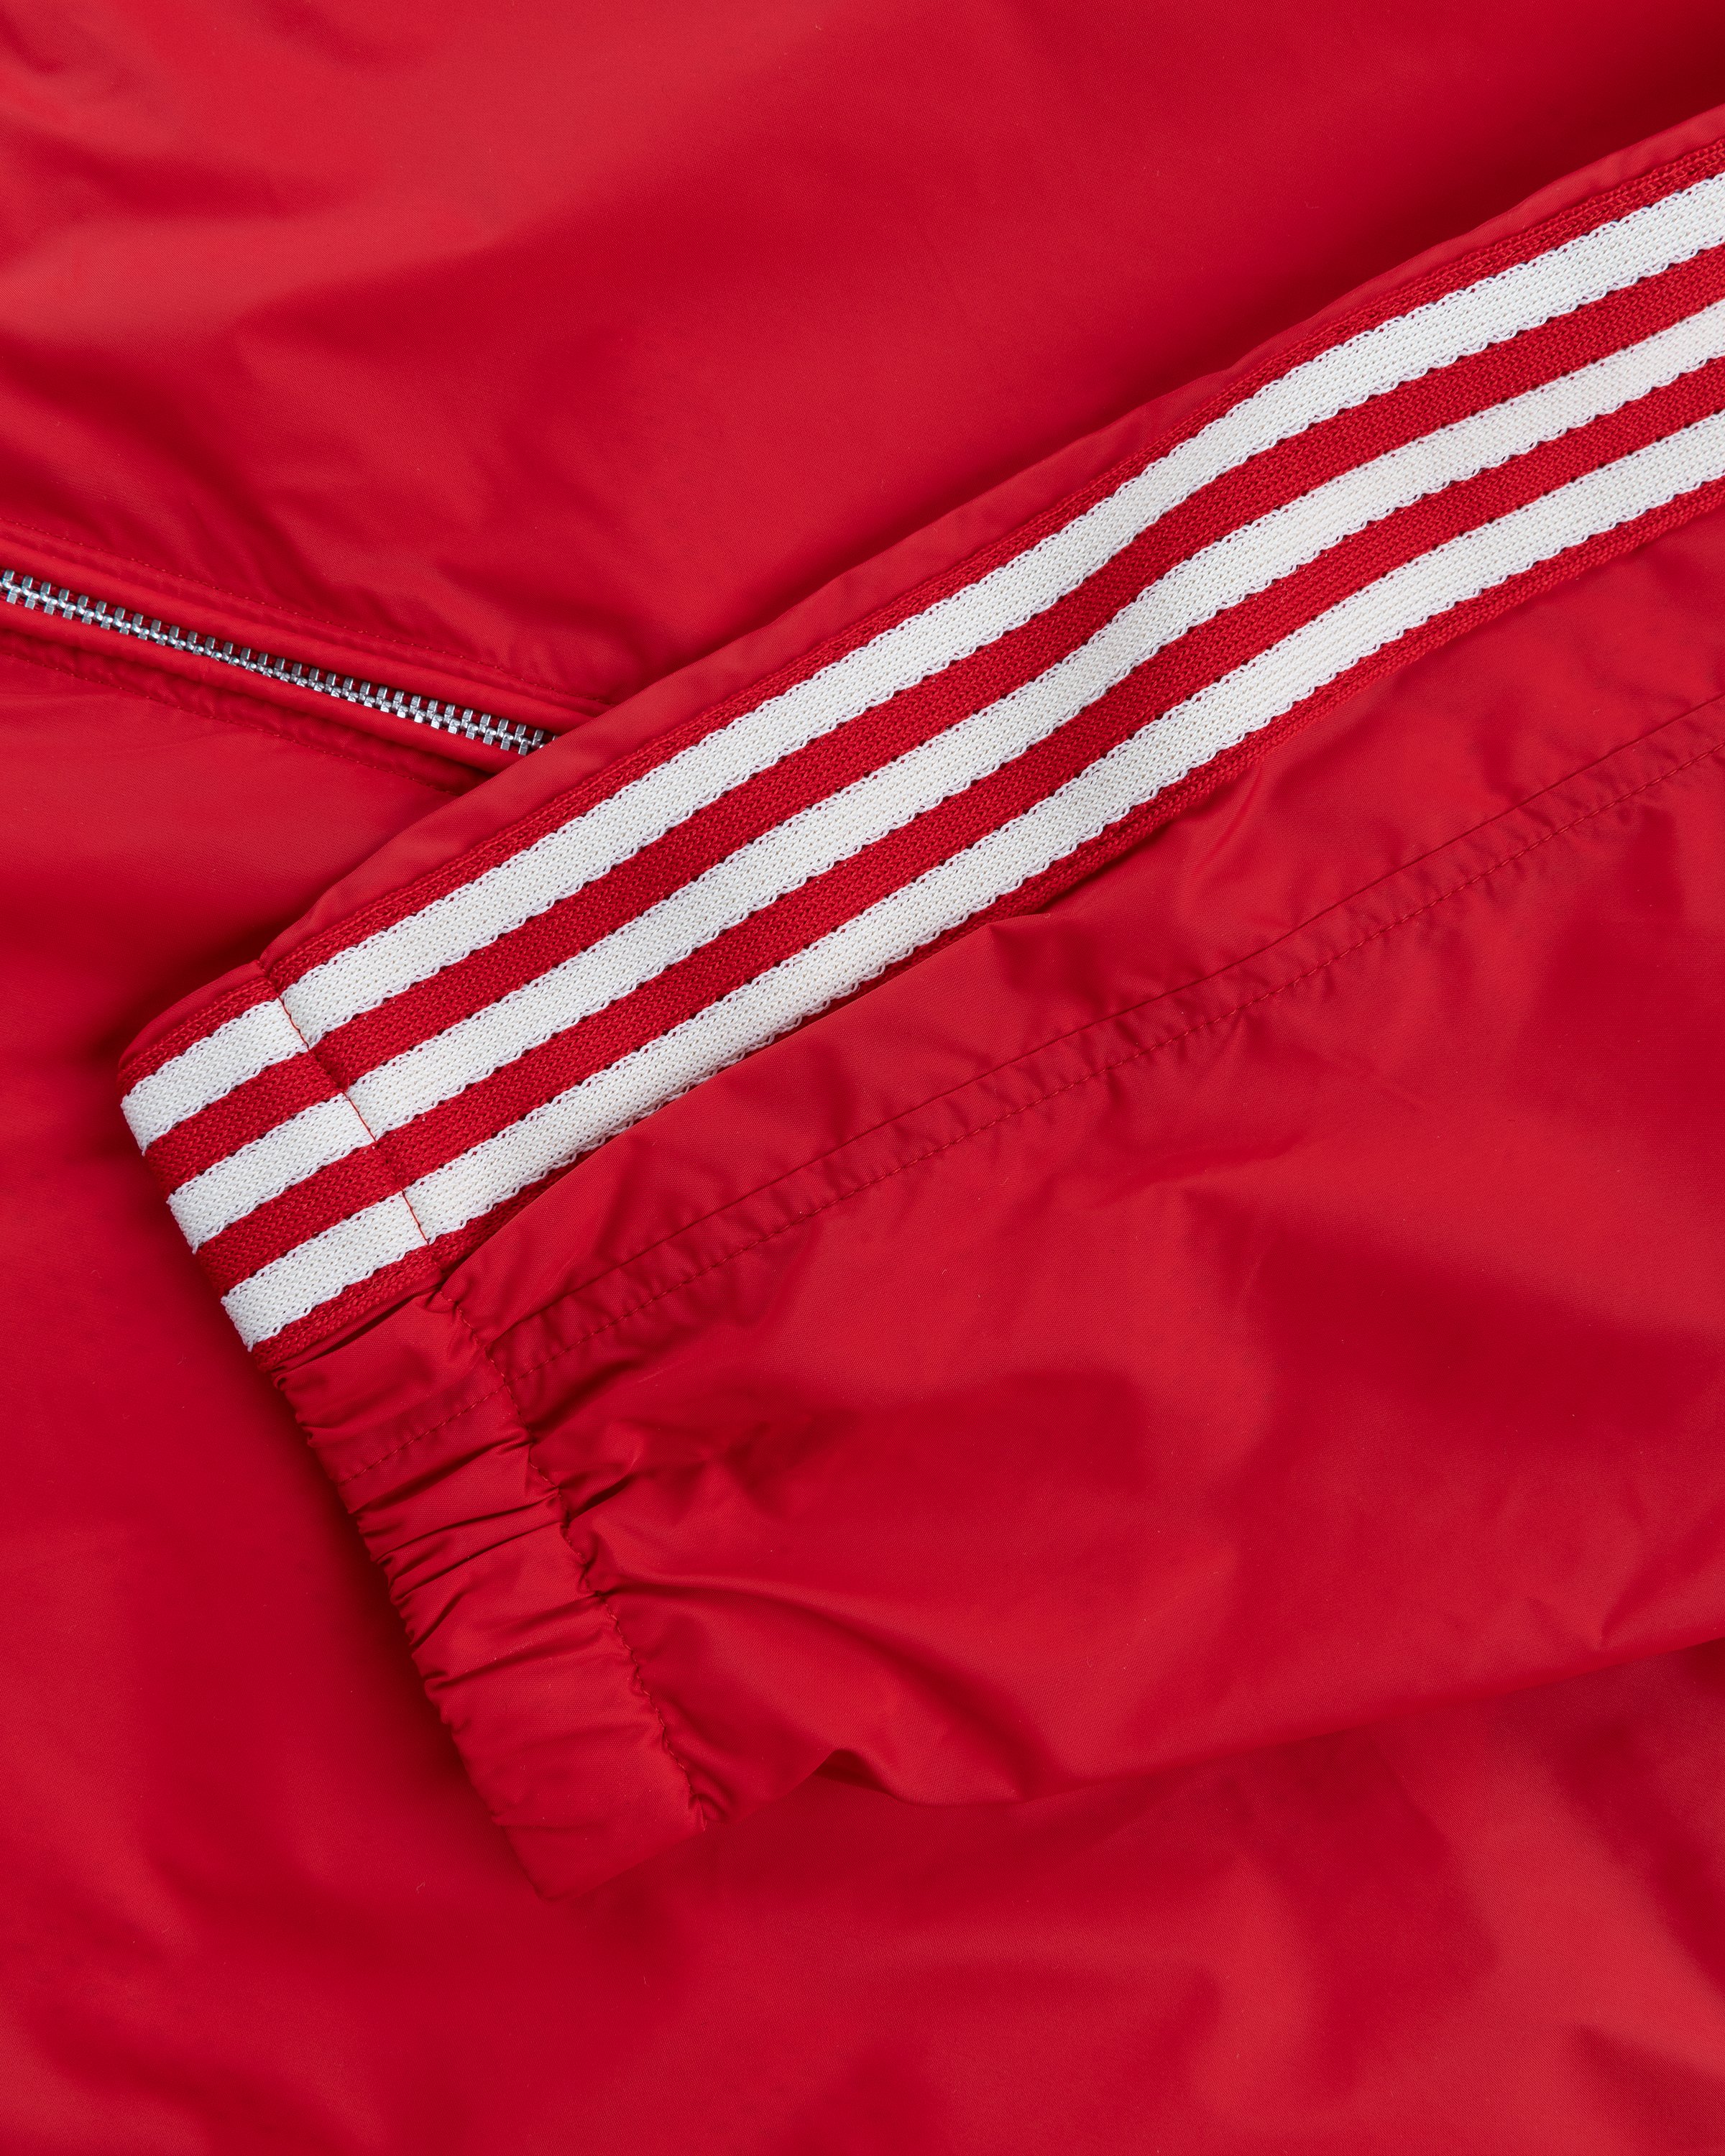 Adidas x Wales Bonner - WB Light Jacket Scarlet - Clothing - Red - Image 5